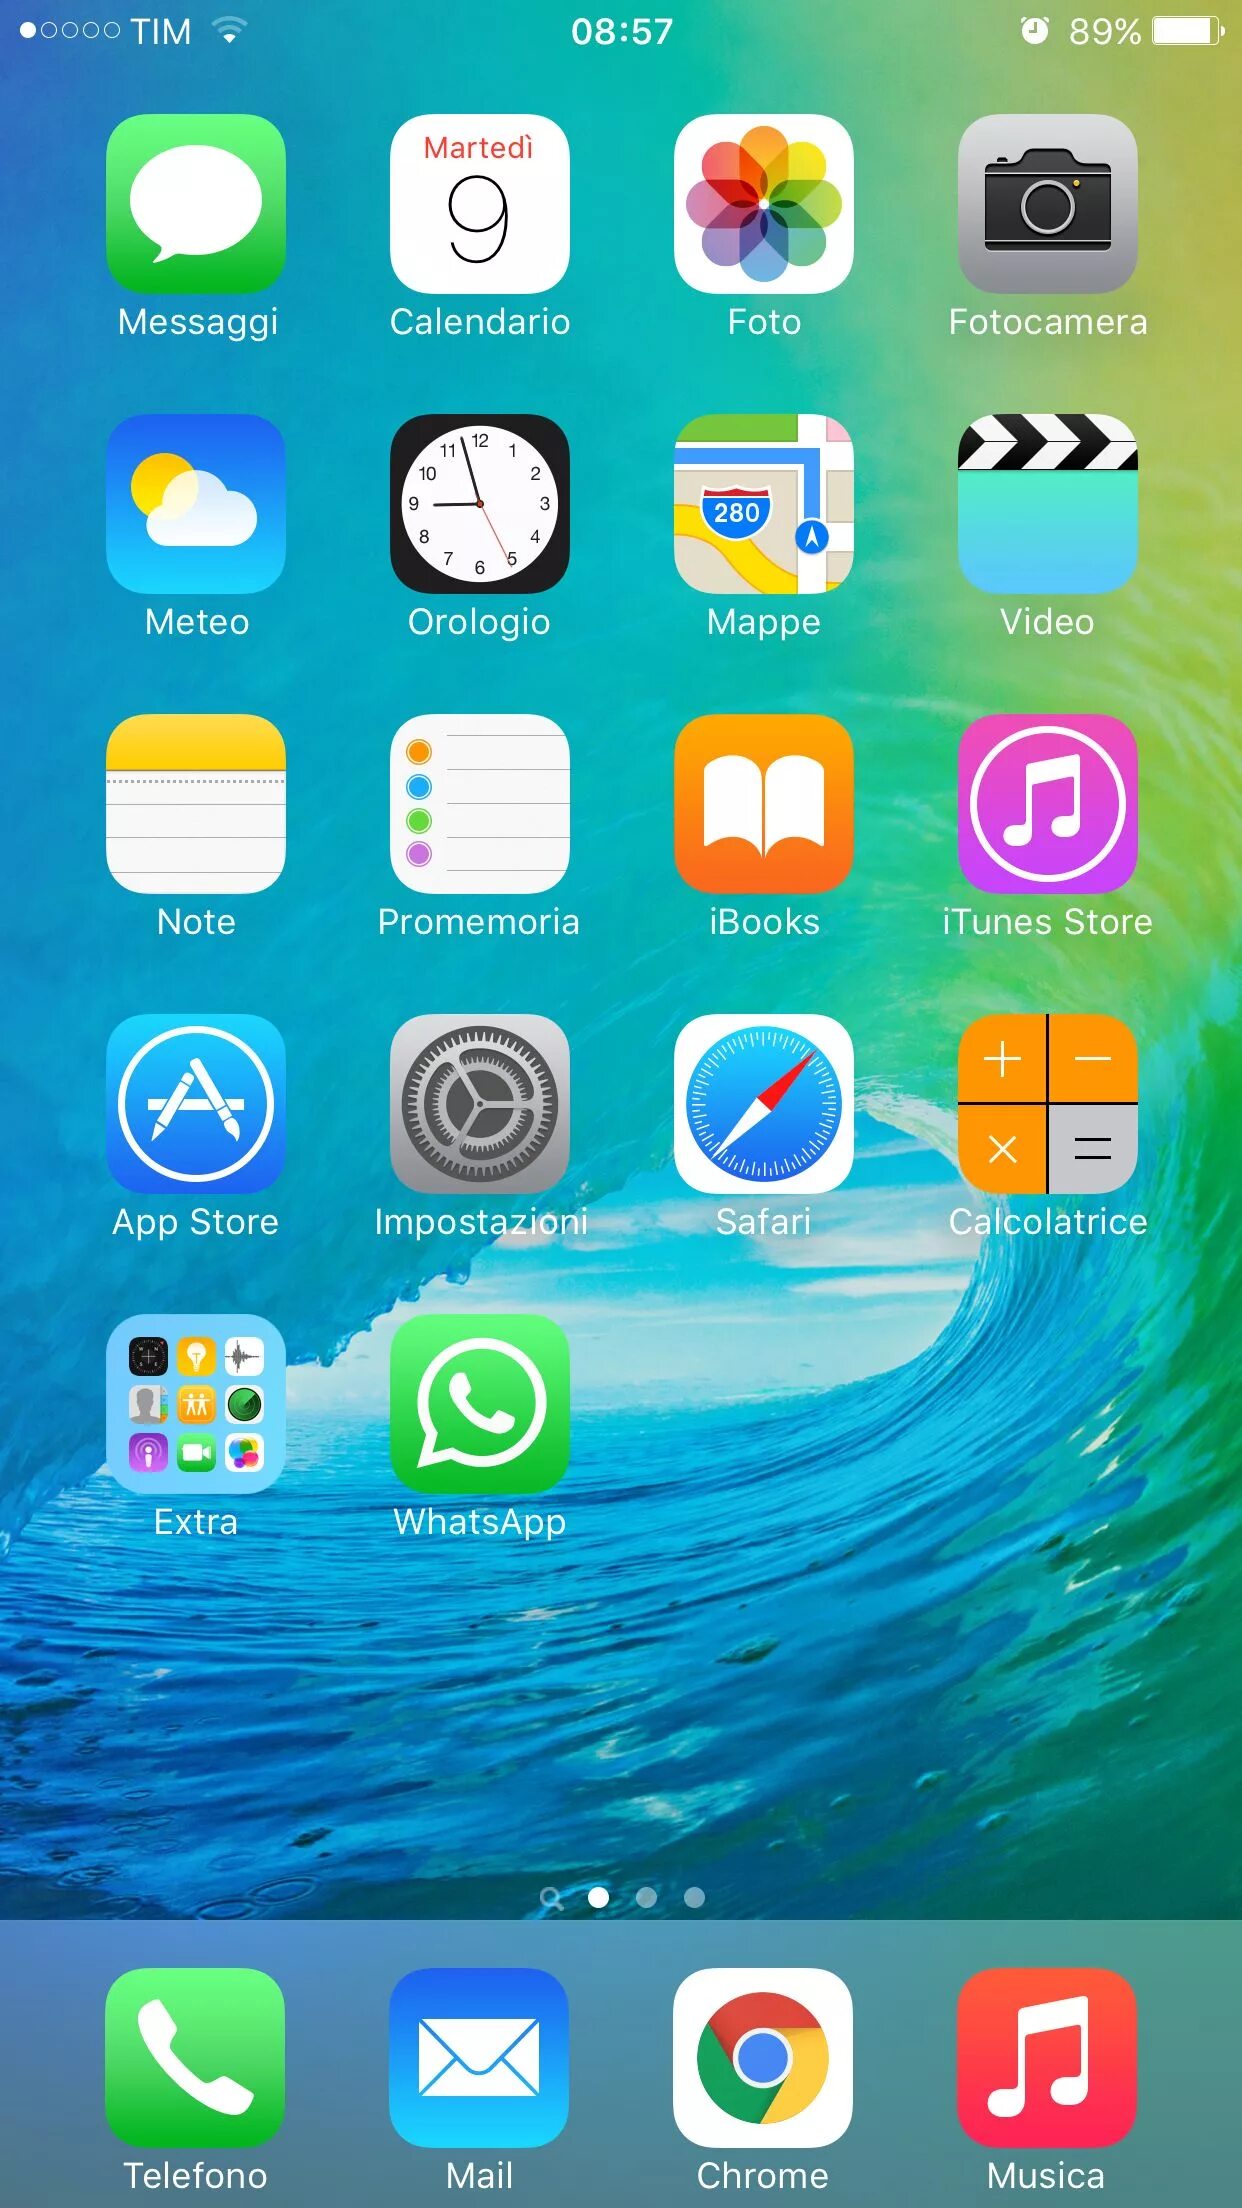 Скриншоты на телефоне poco. Экран iphone 12 снимок экрана. Скрин экрана айфон 6. Экран смартфона с приложениями. Айфон экран с приложениями.